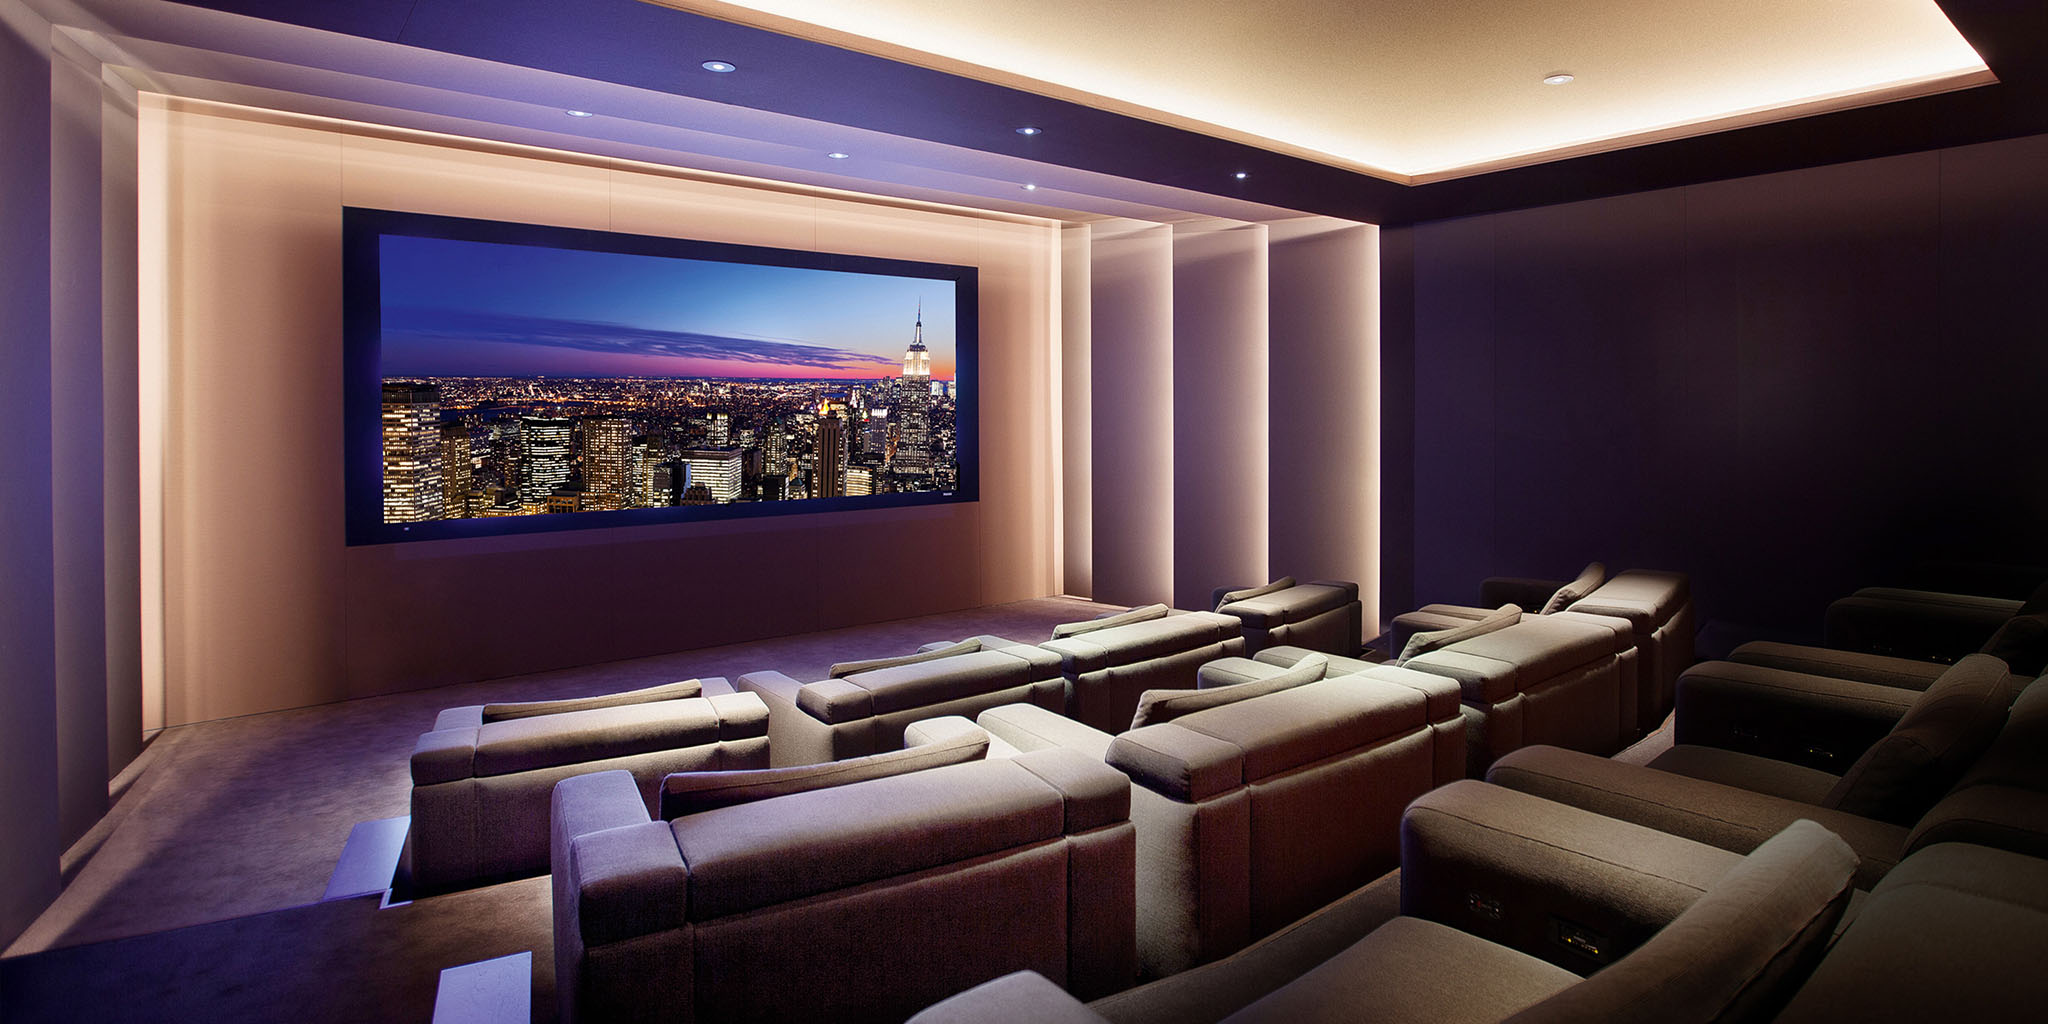 1.0 - EHE - Luxury Private Cinema 3